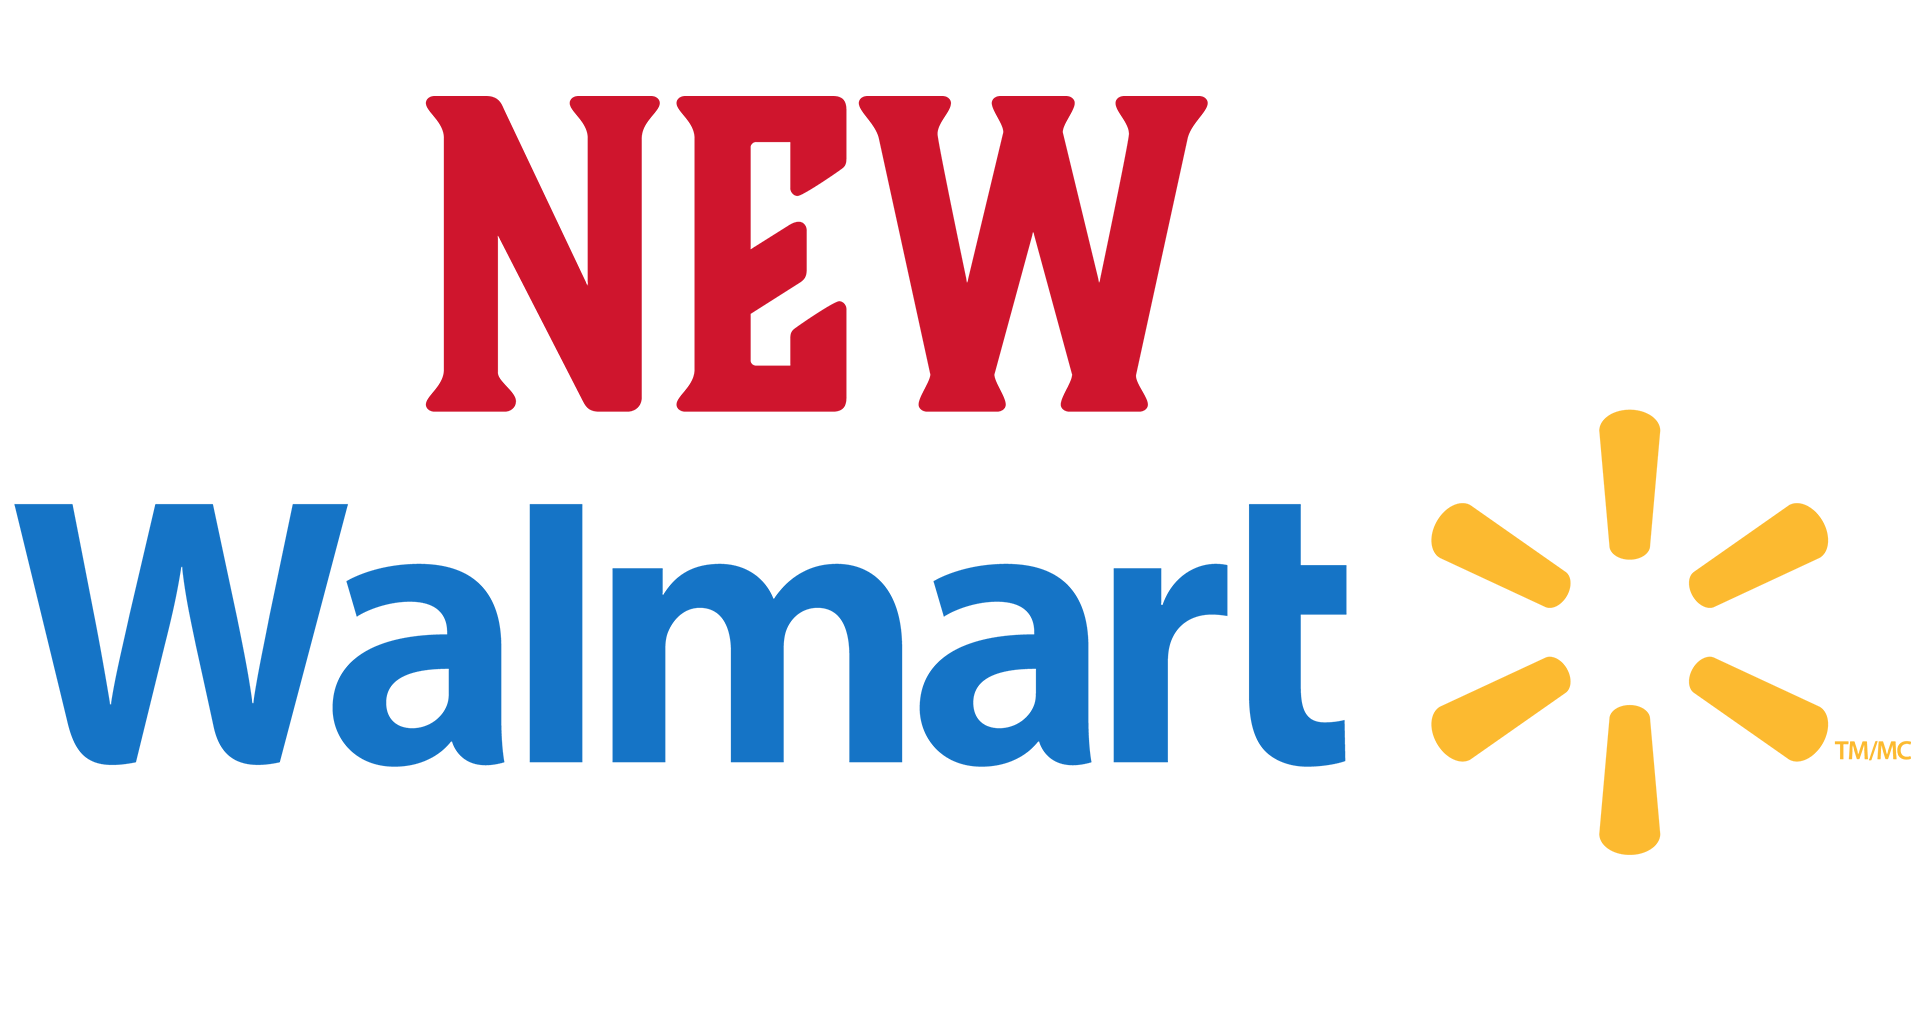 New Walmart